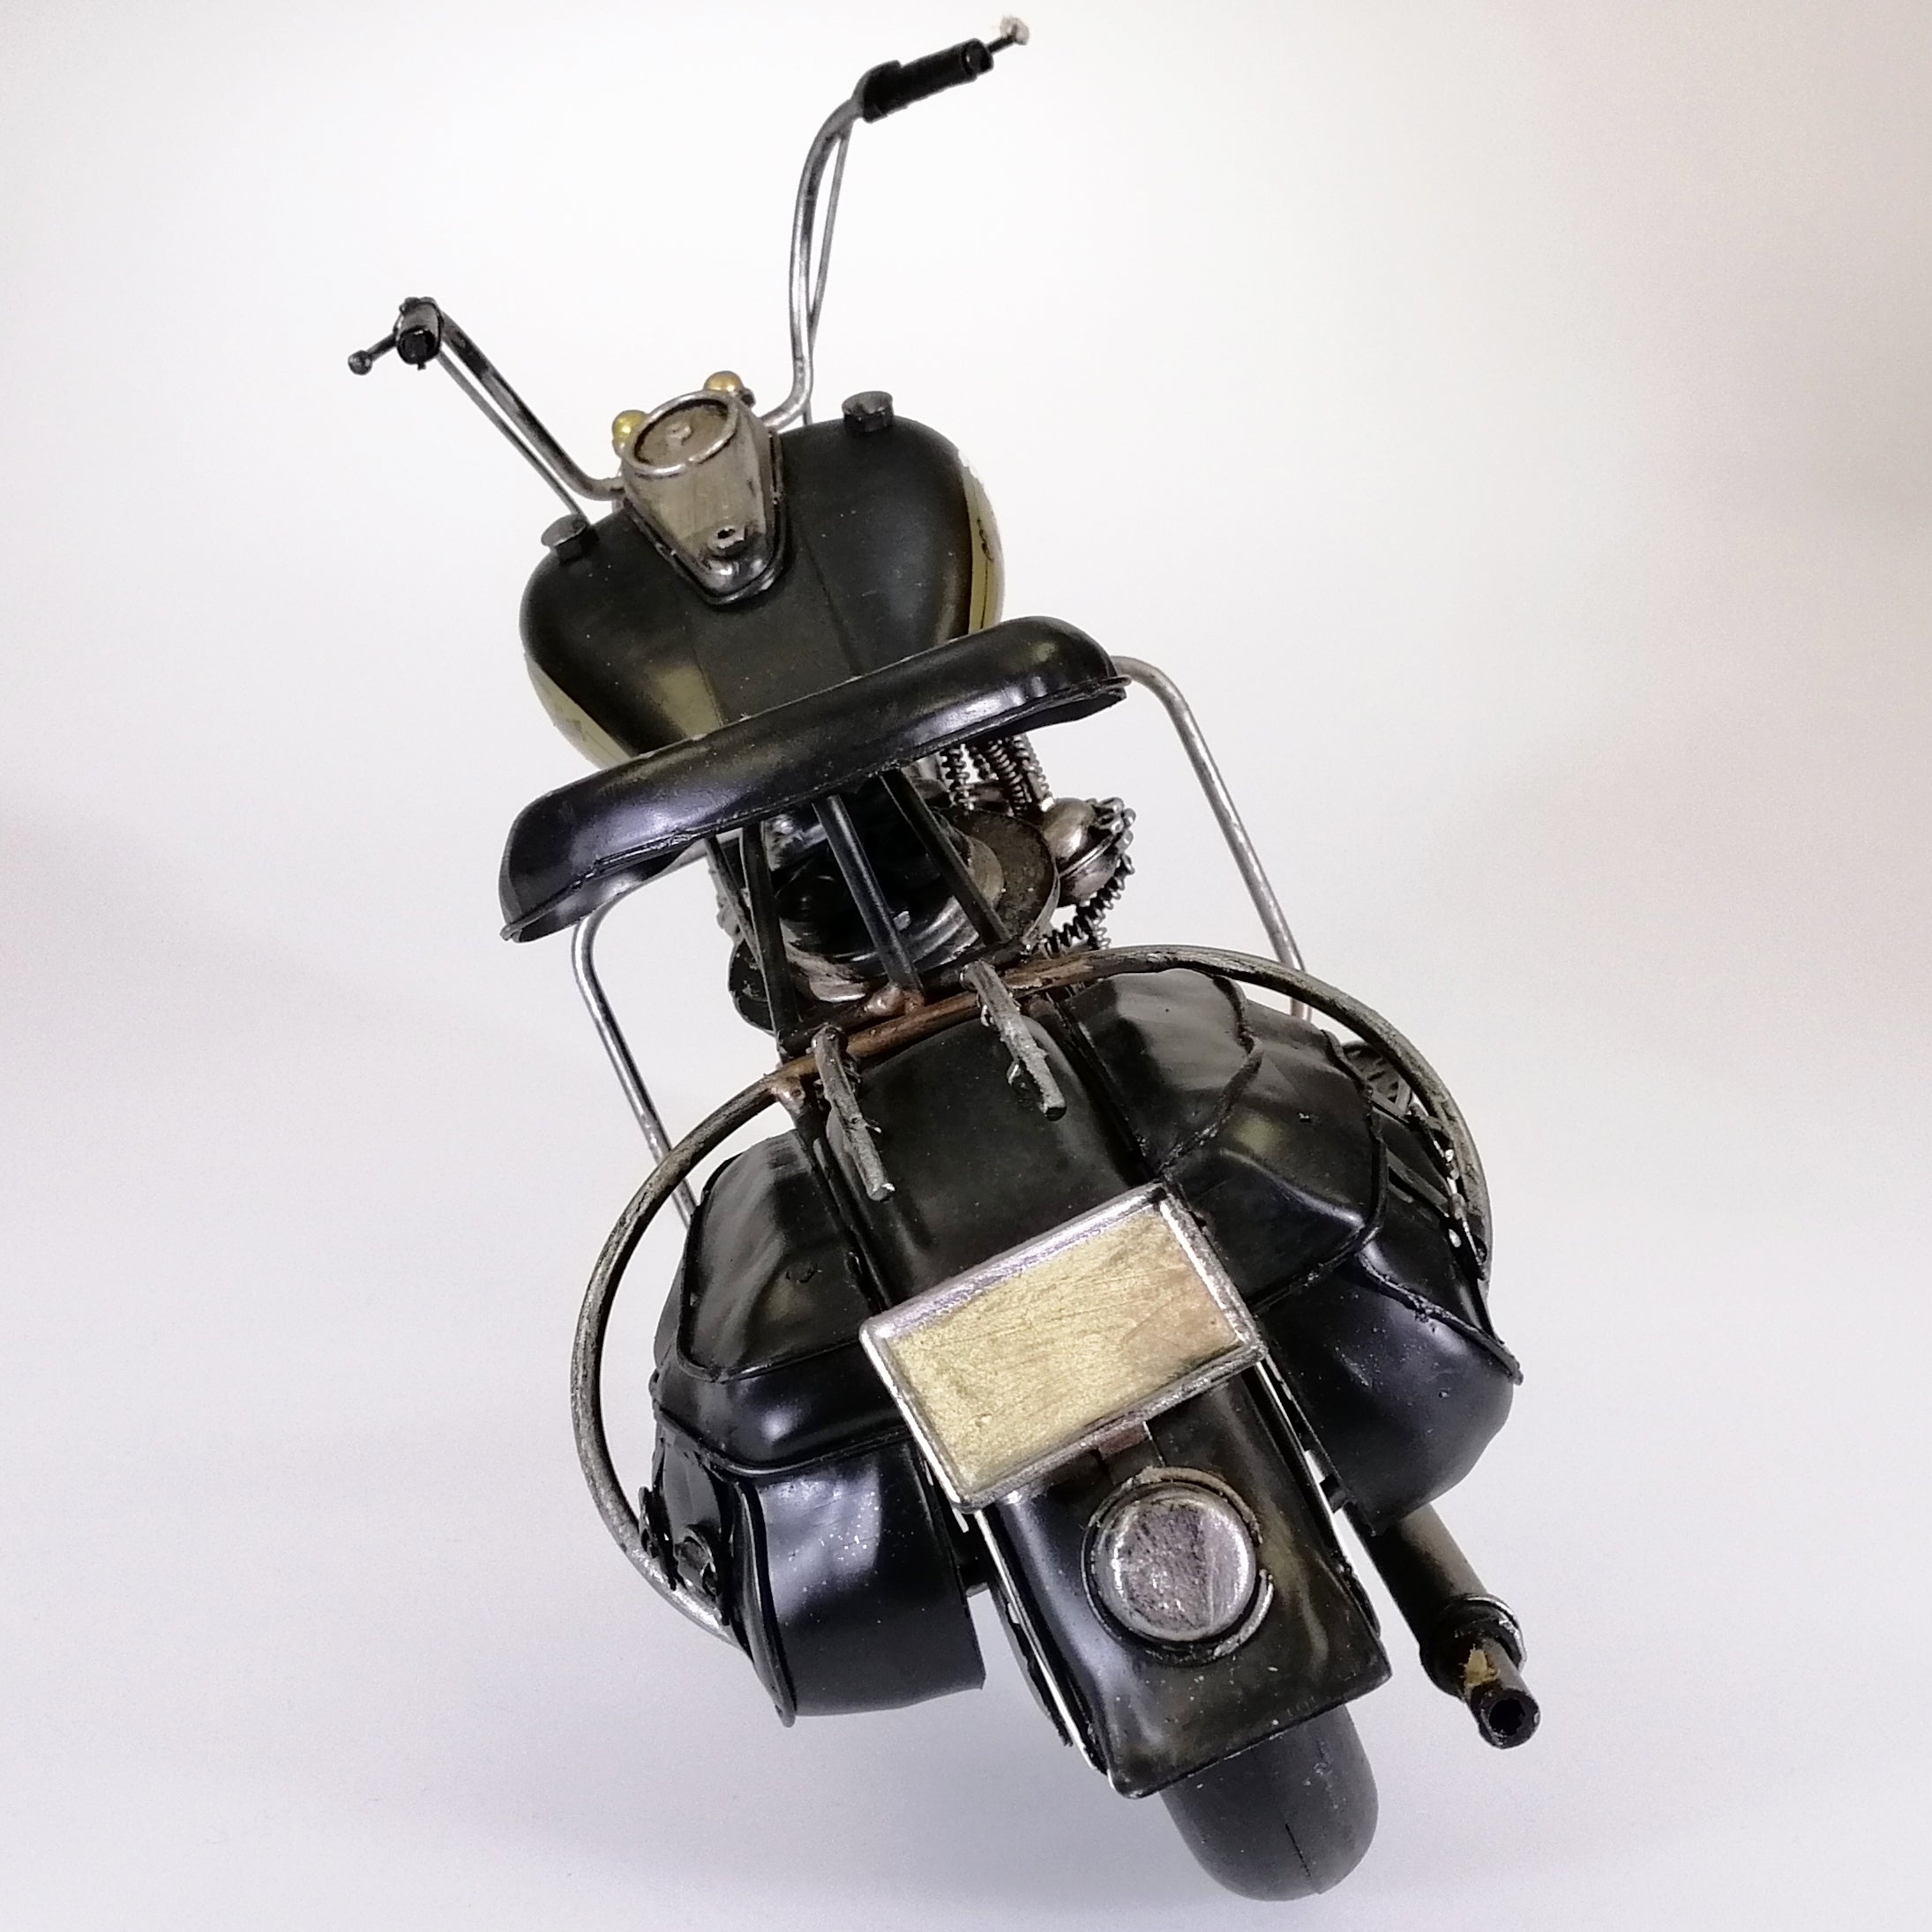 Vintage Indian Motorcycle Sculpture